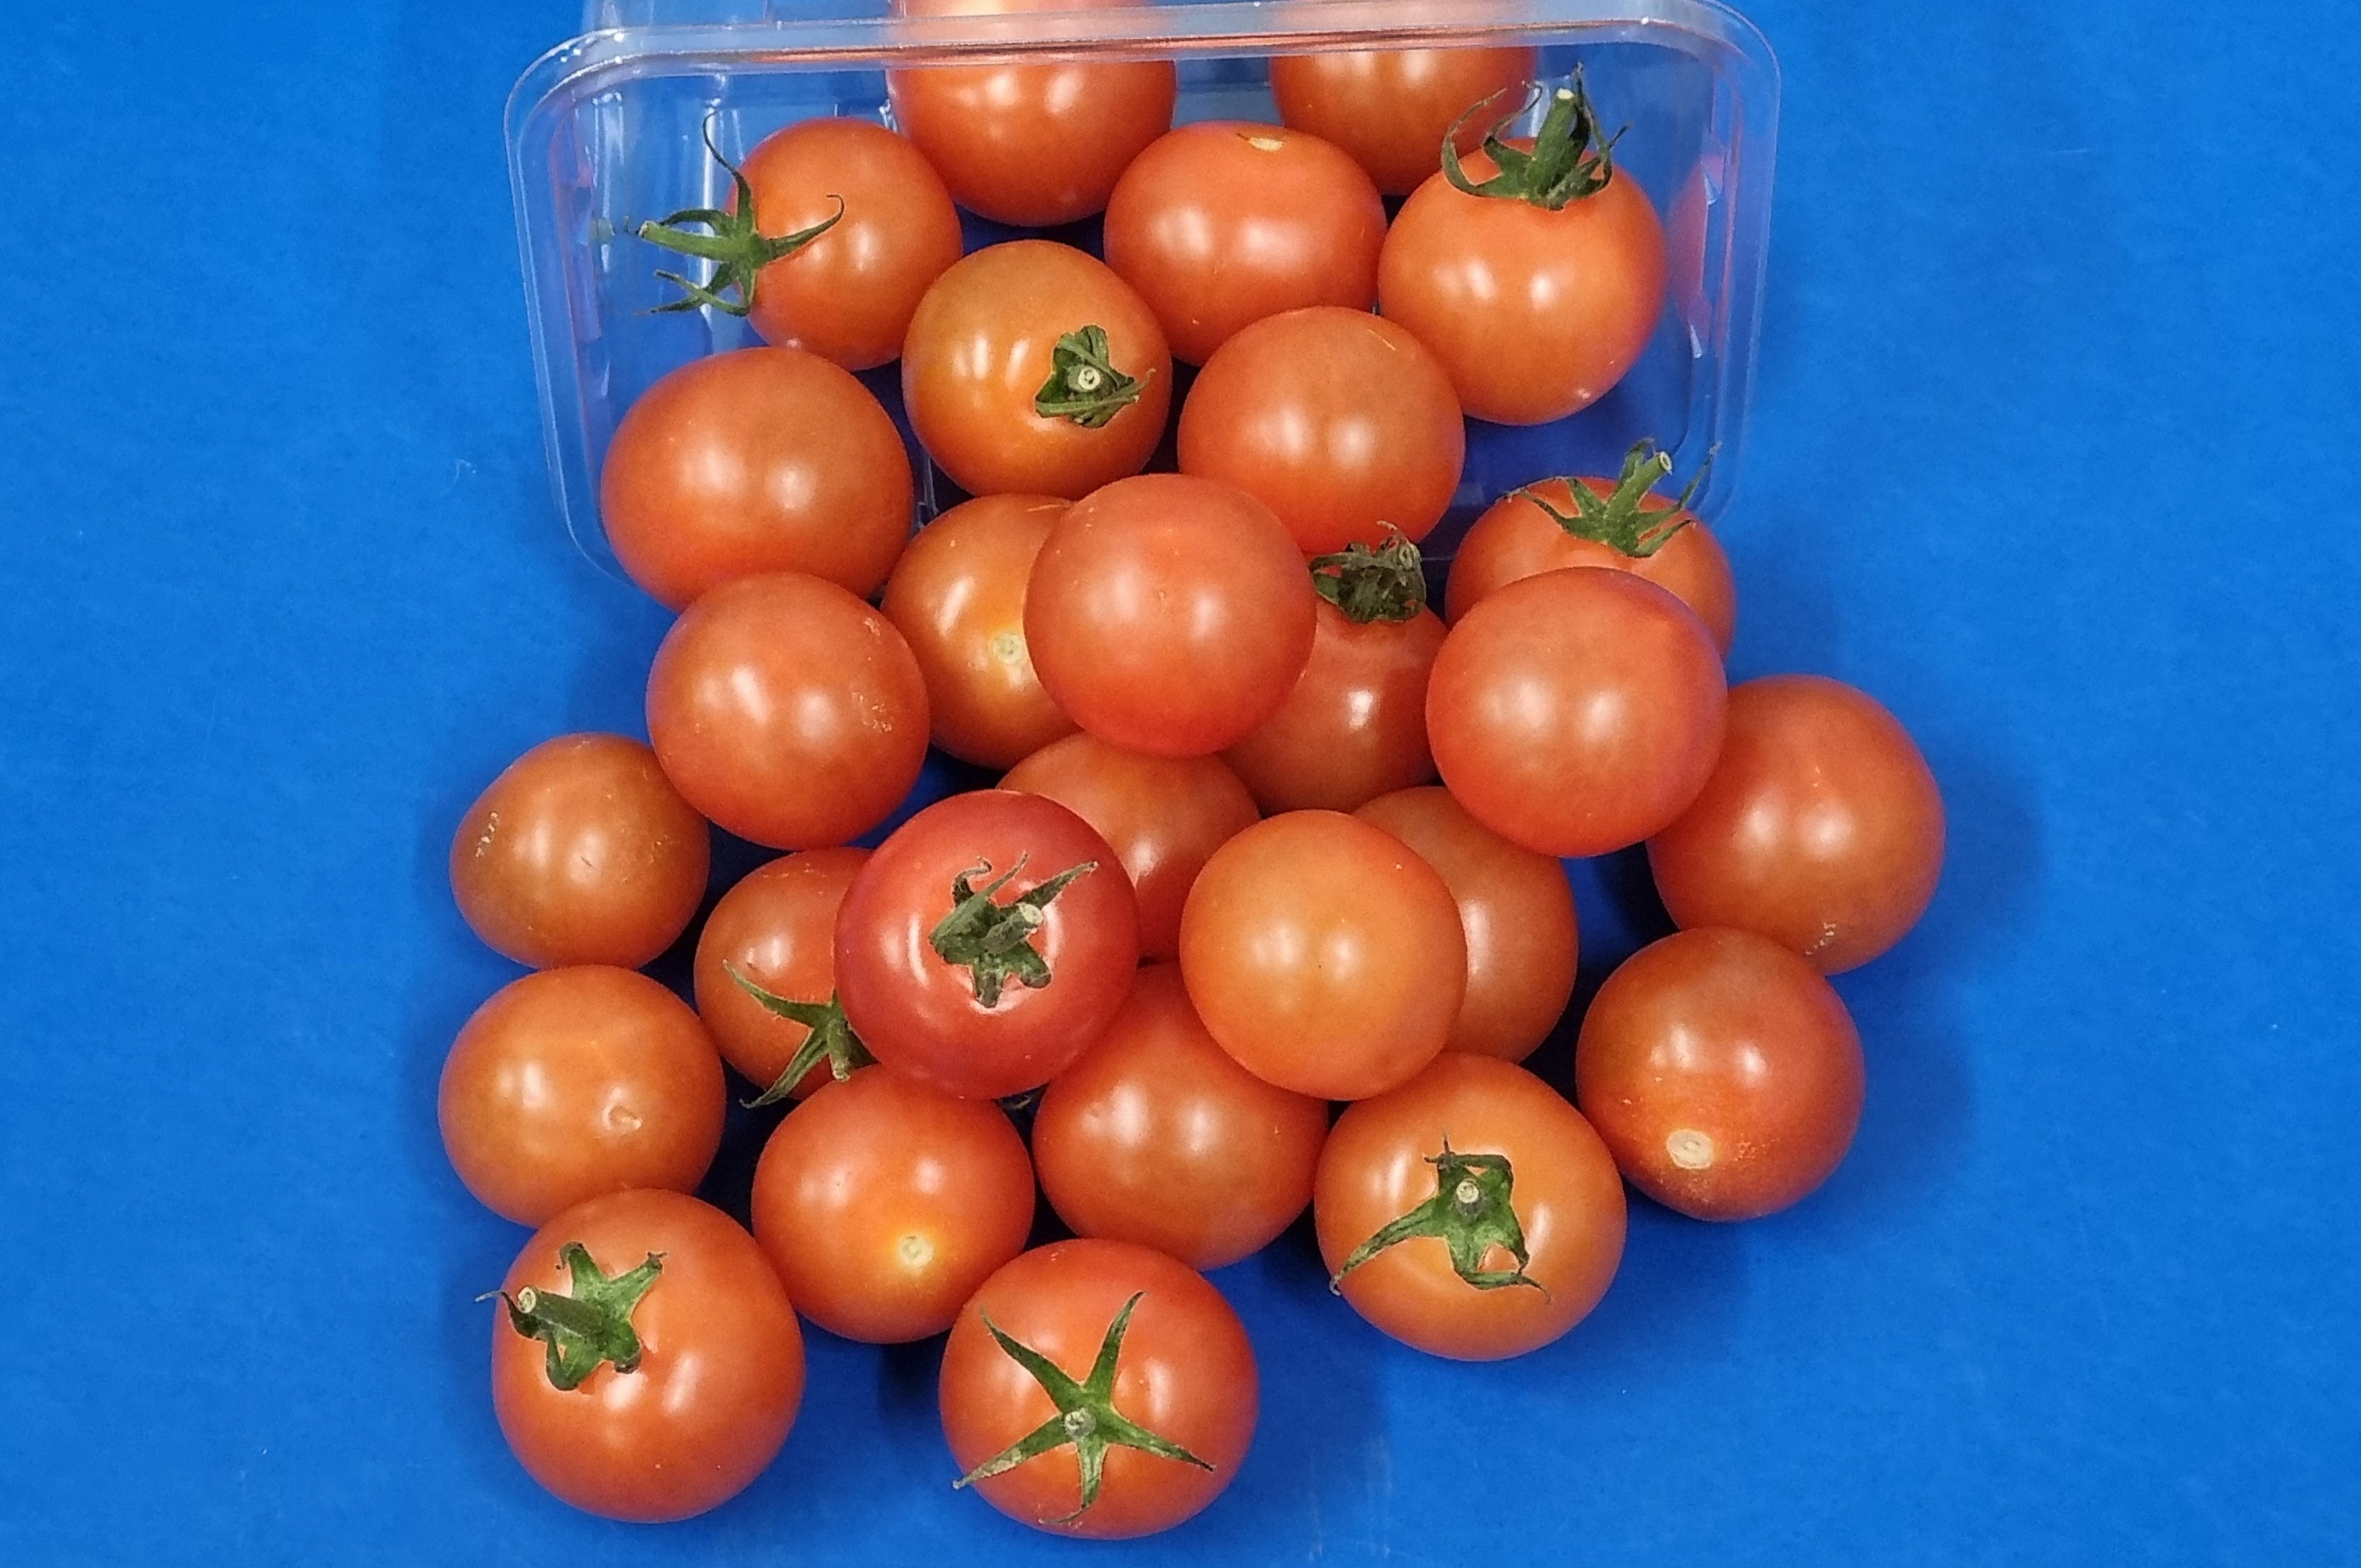 Cherry tomaatjes rood 250 gram